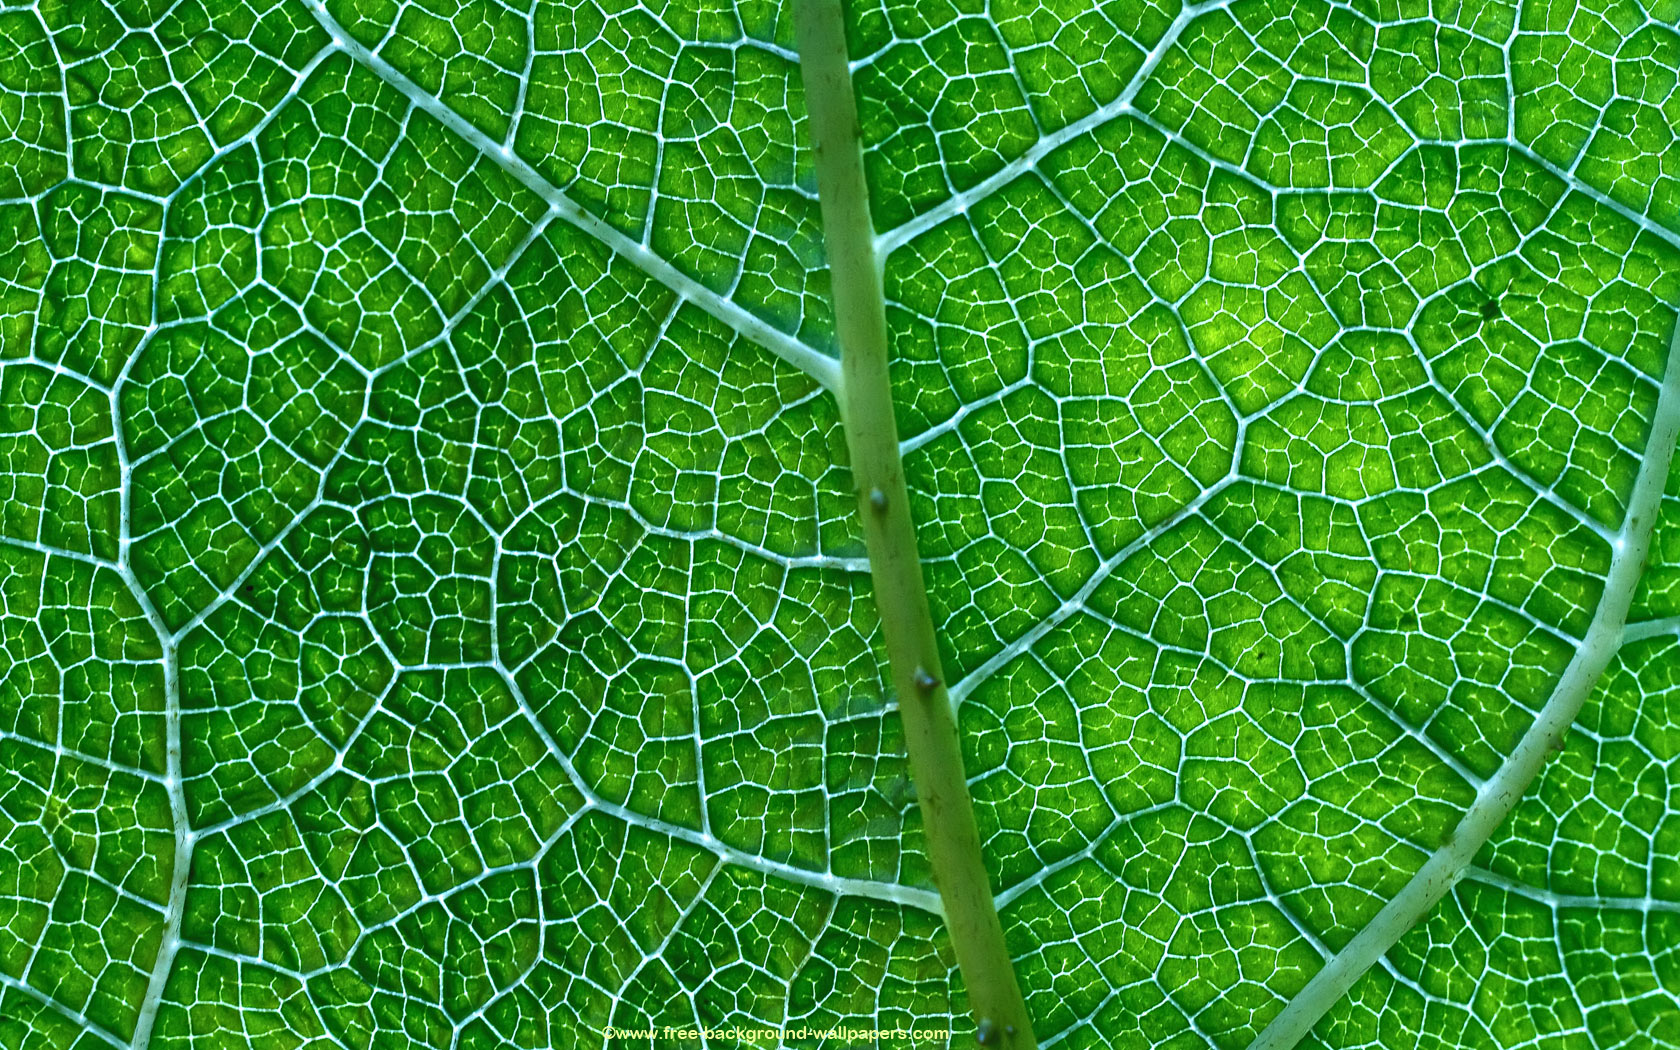 Pattern on a Green Leaf   Flower Background Wallpaper   1680x1050